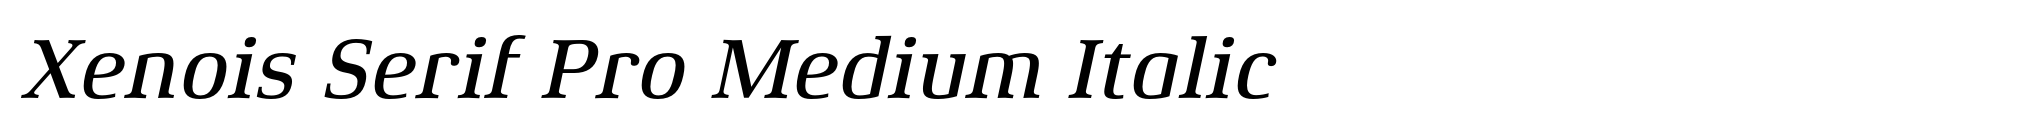 Xenois Serif Pro Medium Italic image